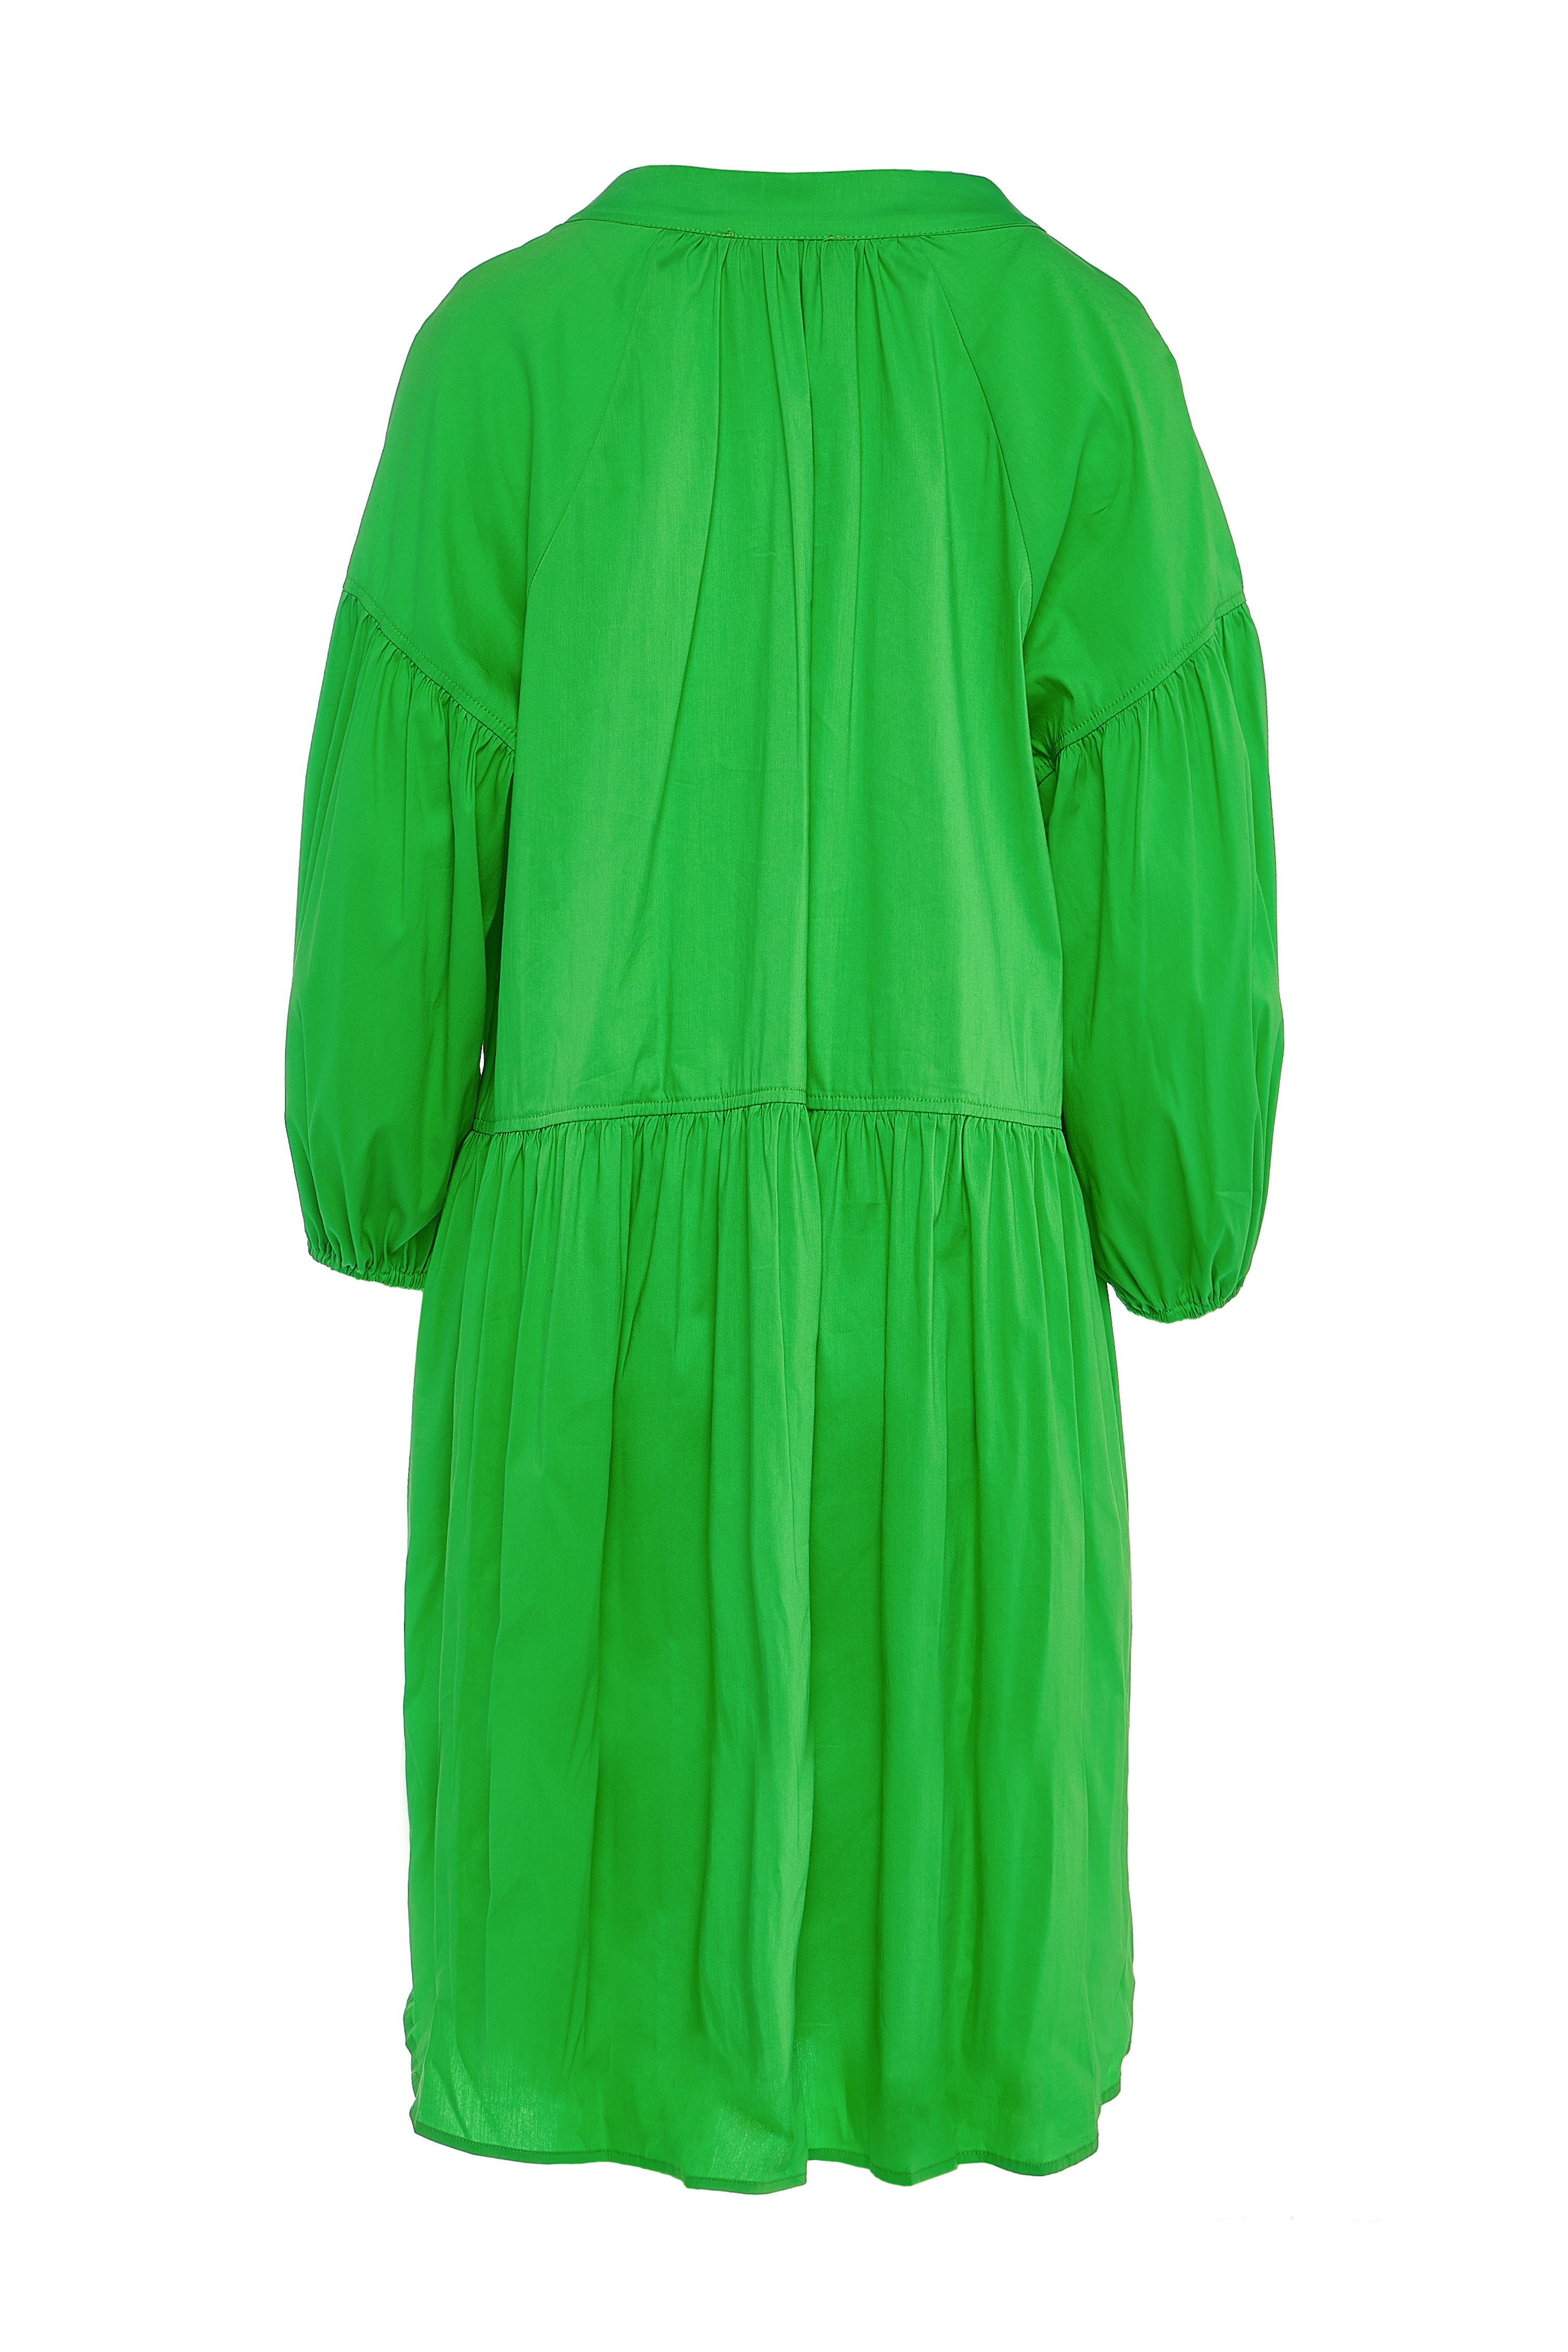 Devotion Izoldi Dress - Green - RUM Amsterdam